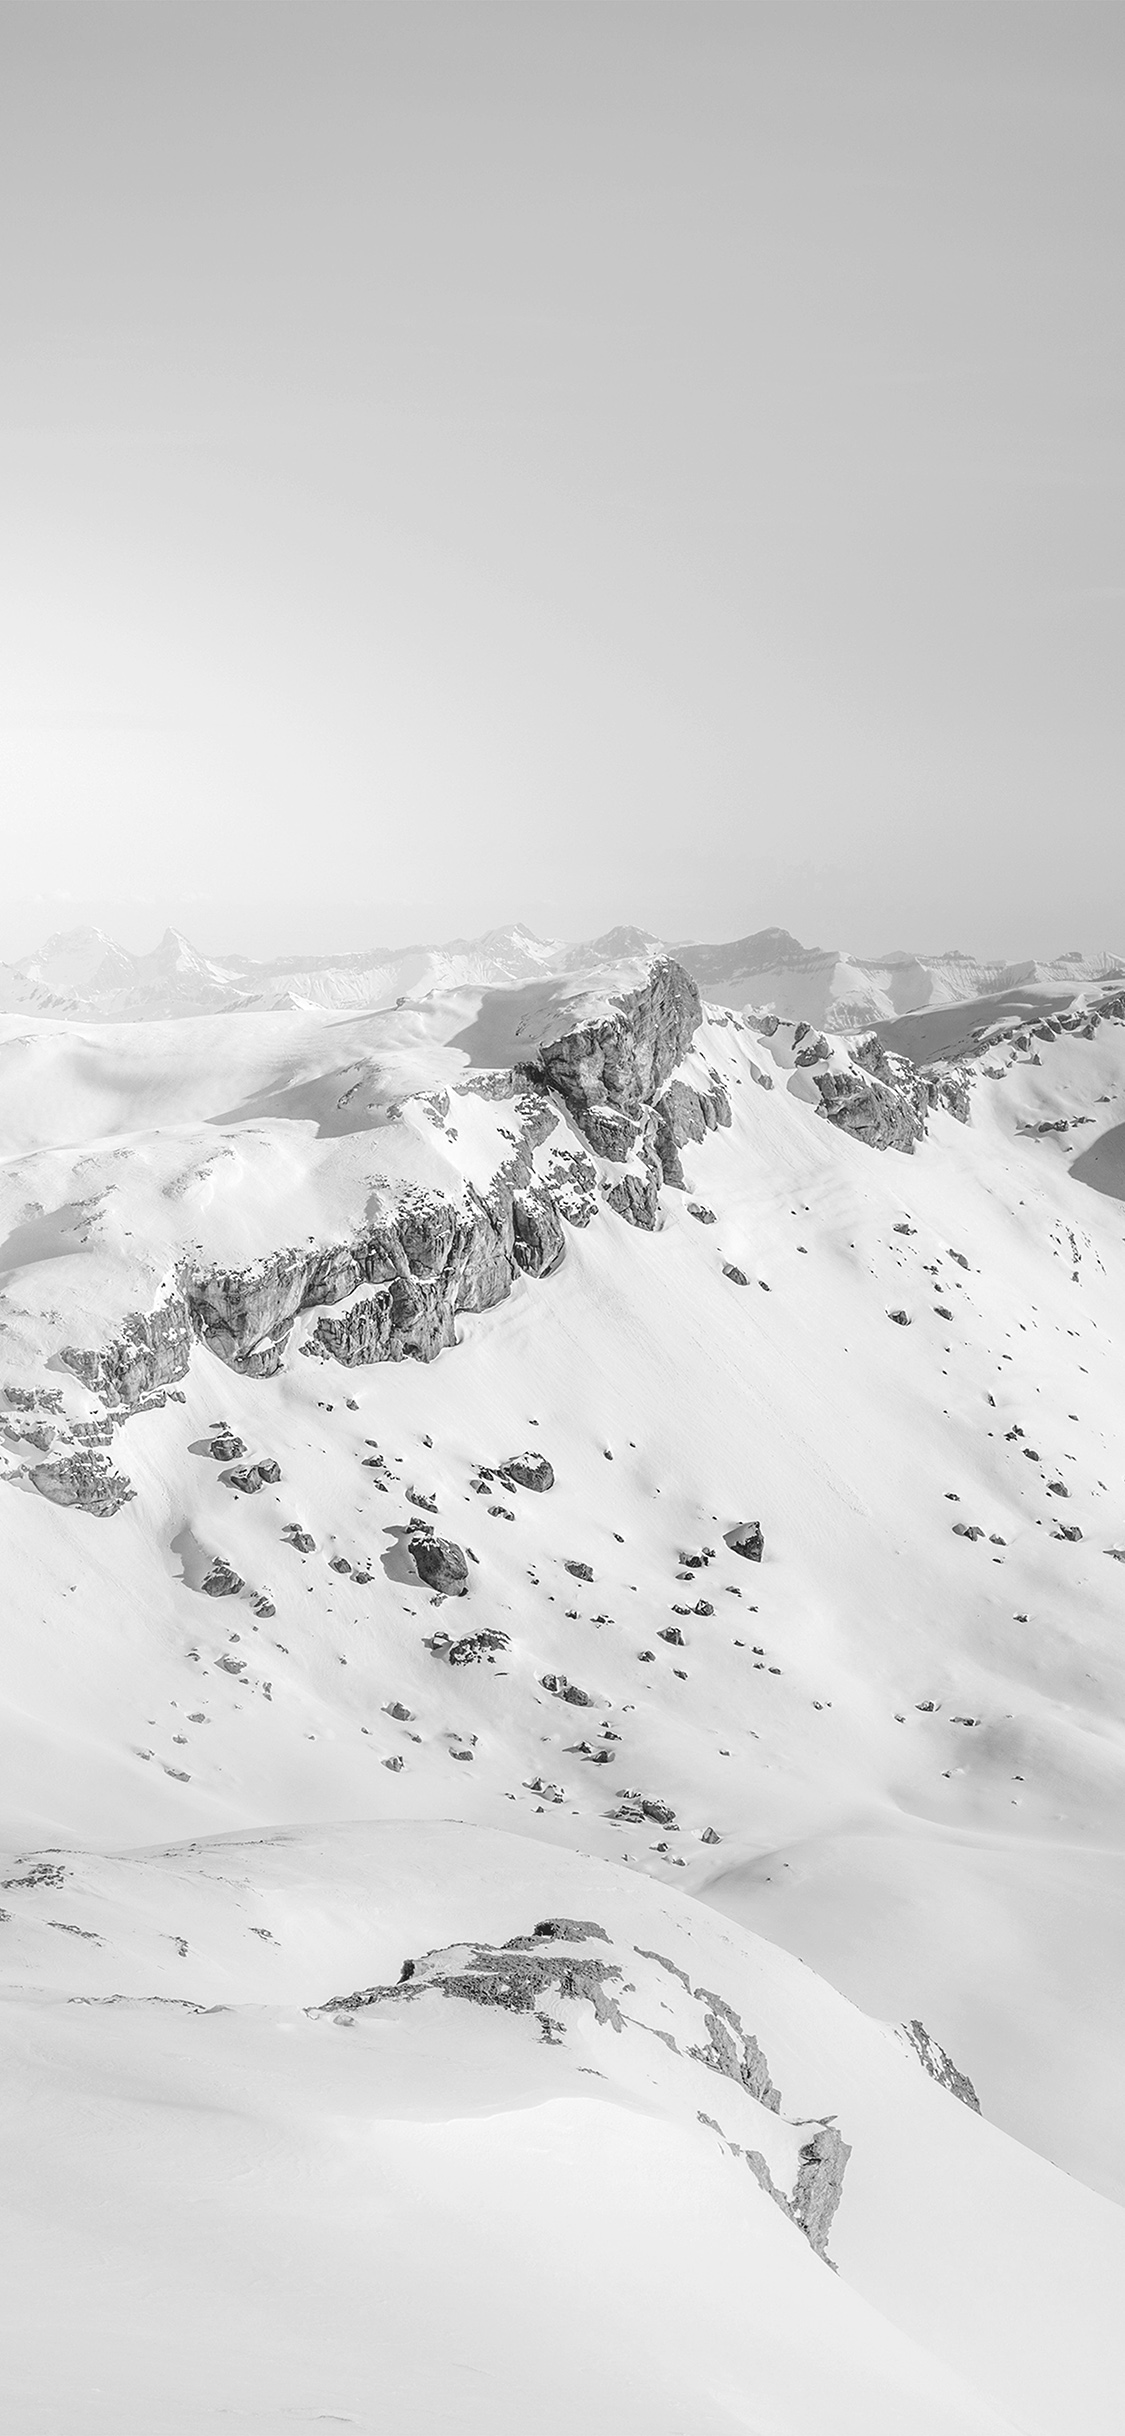 iPhone X wallpaper. snow mountain winter nature bw dark